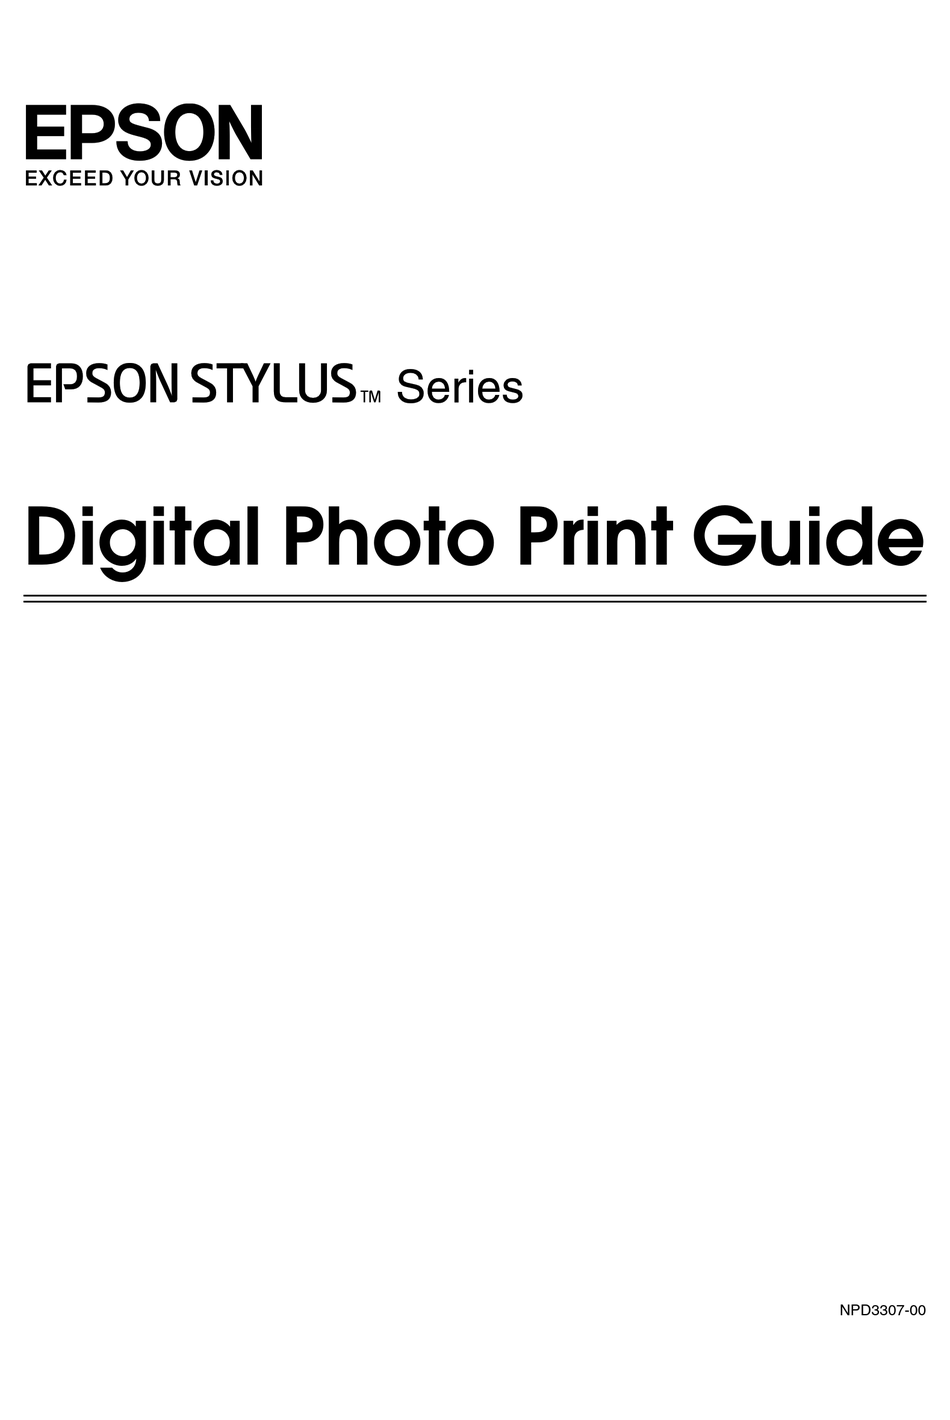 Epson Stylus Series Manual Pdf Download Manualslib 2564